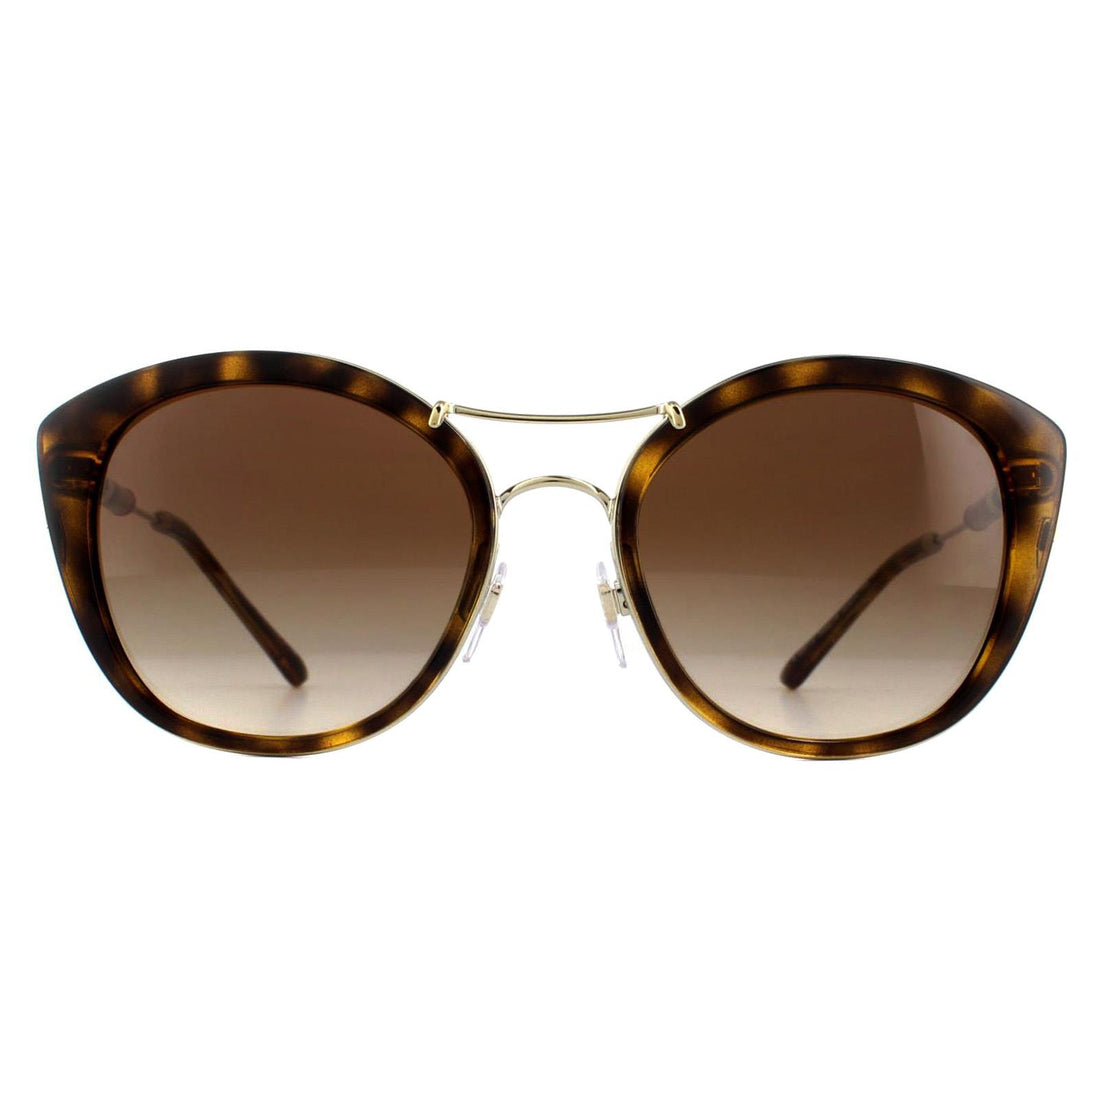 Burberry BE4251Q Sunglasses Dark Havana / Brown Gradient